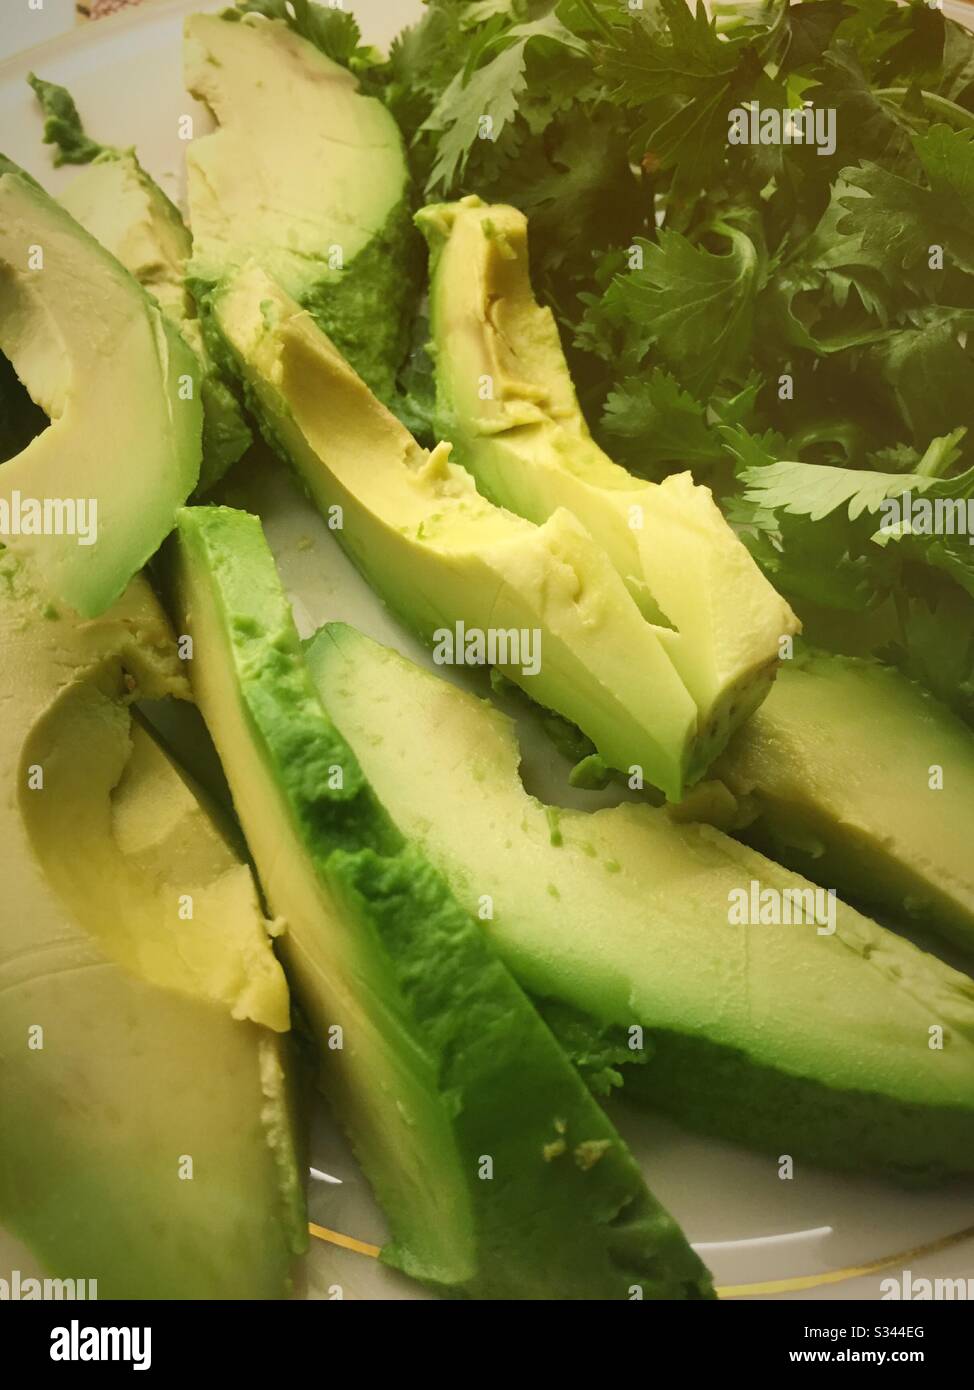 Close up of an avocado and cilantro salad Stock Photo